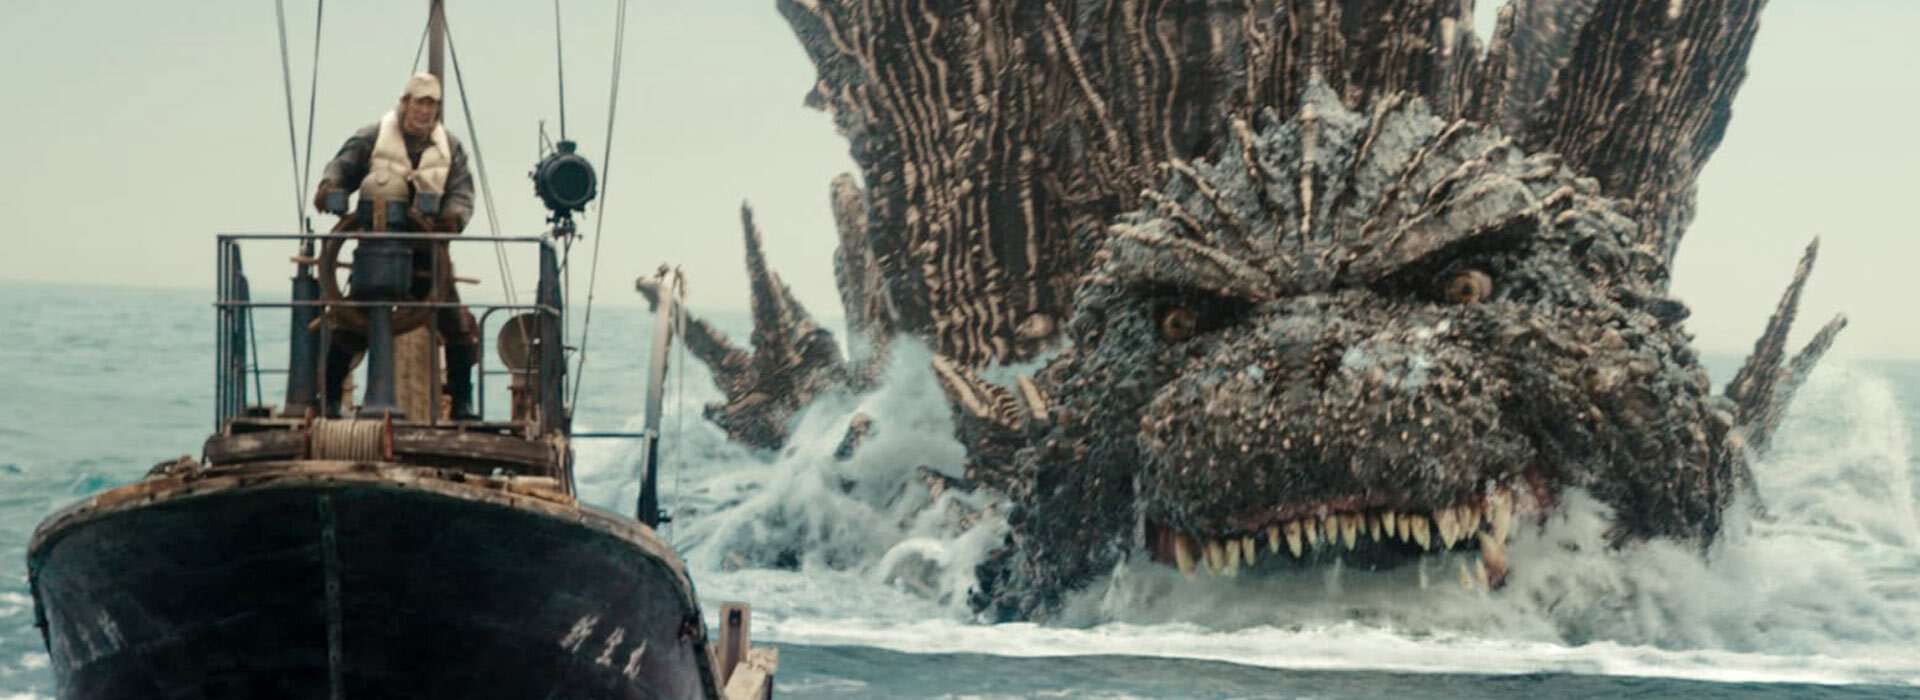 Crítica de ‘Godzilla Minus One’: curar a história